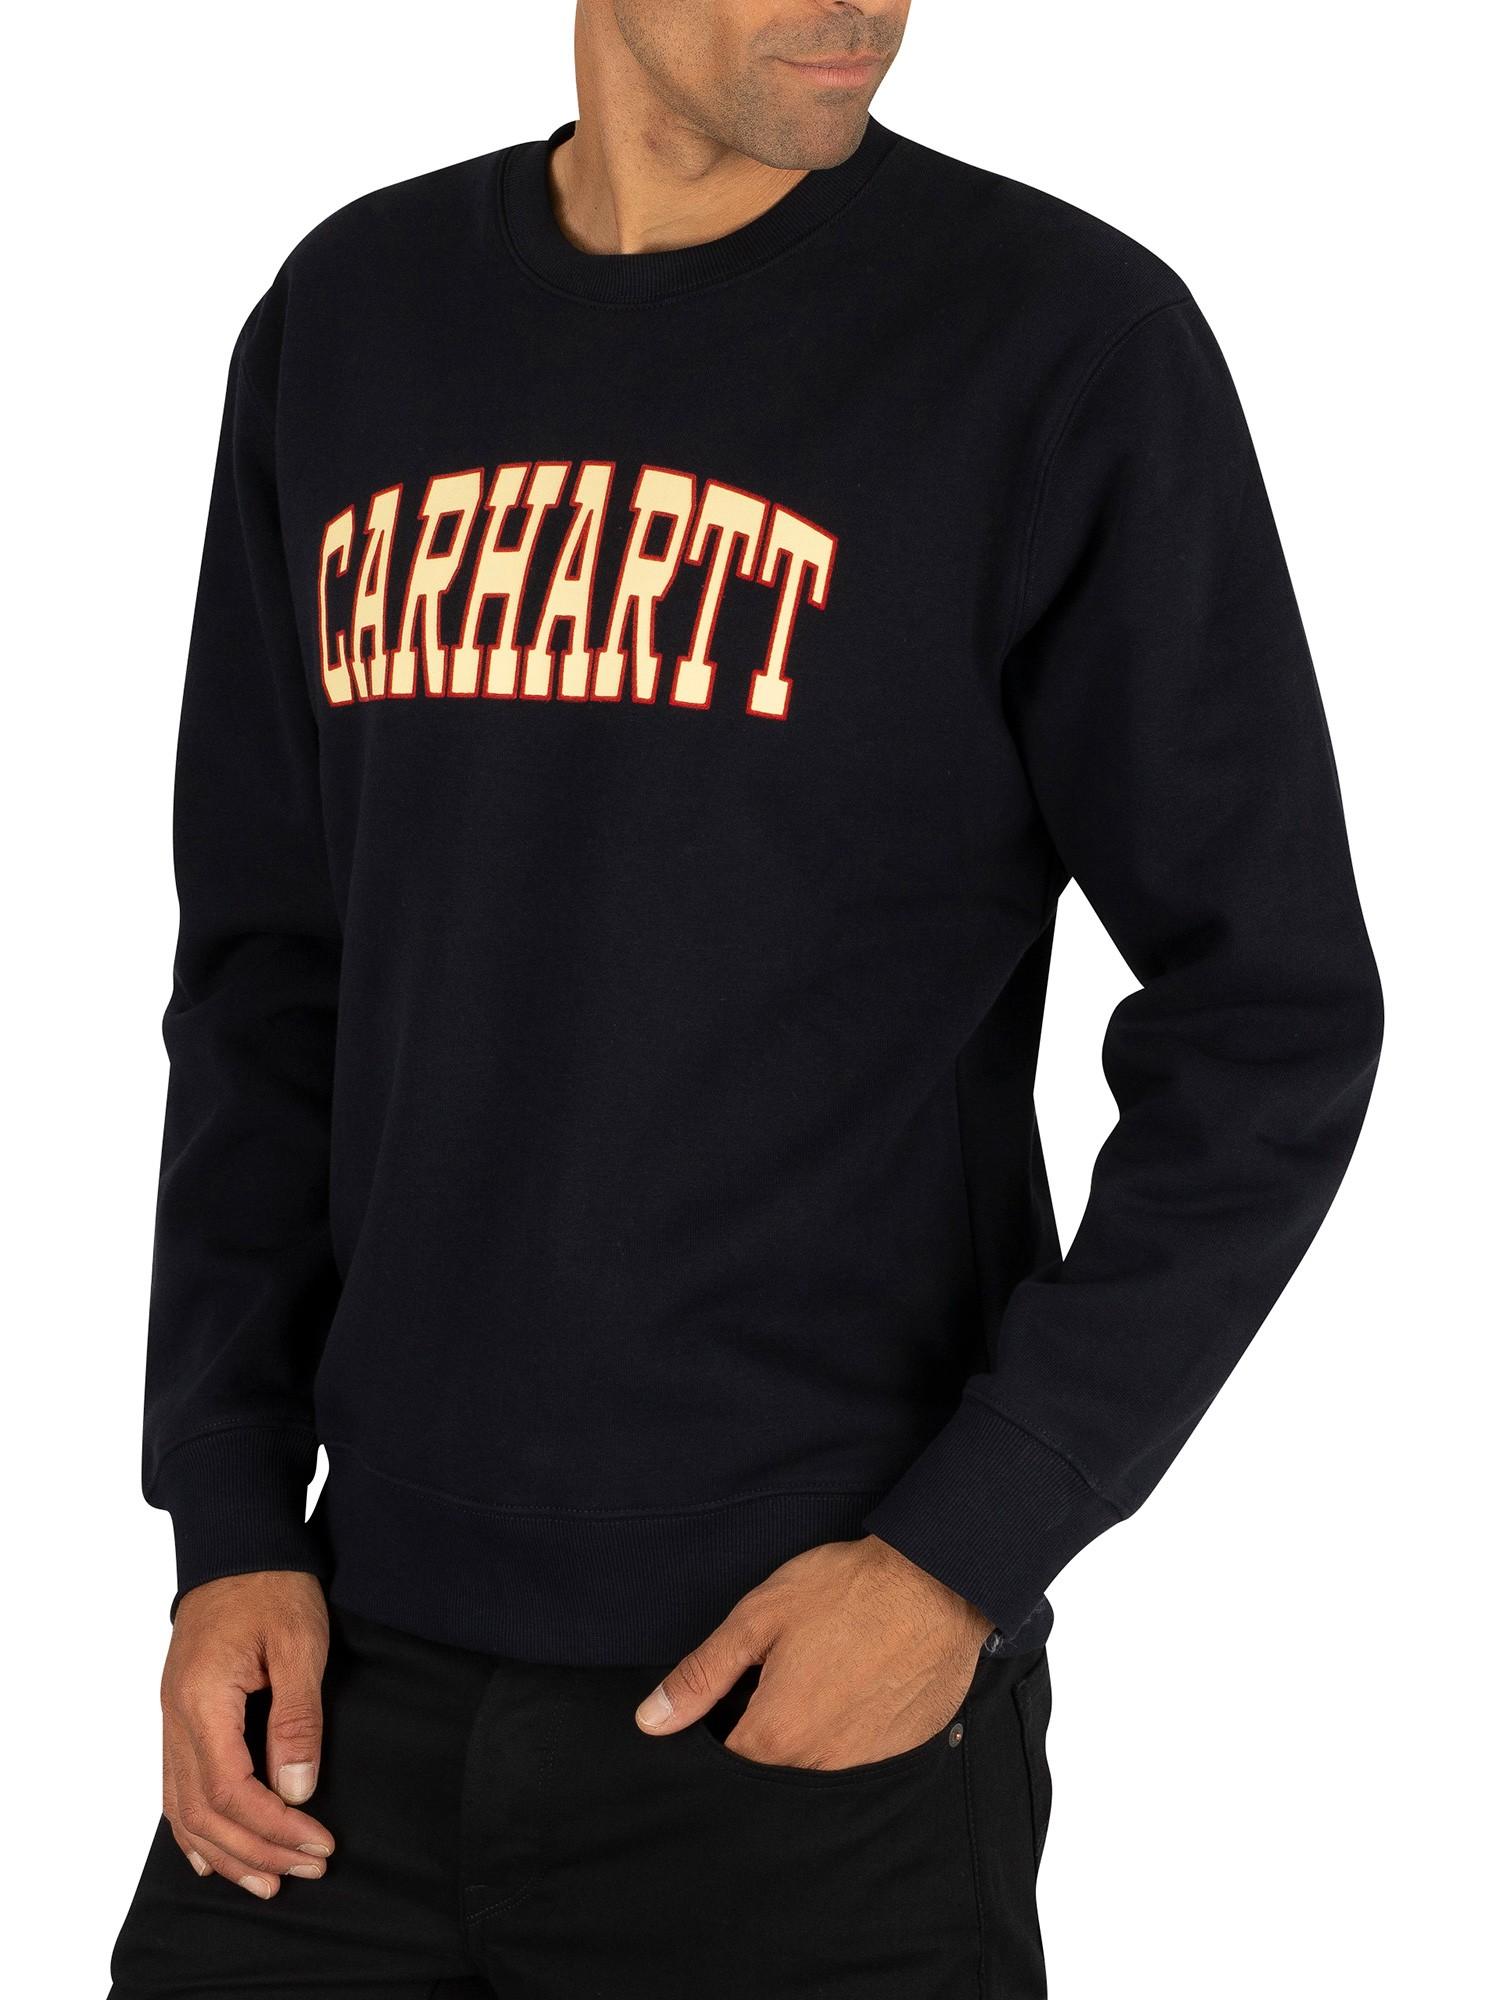 Carhartt WIP Theory Sweatshirt in Dark Navy (Blue) for Men - Lyst